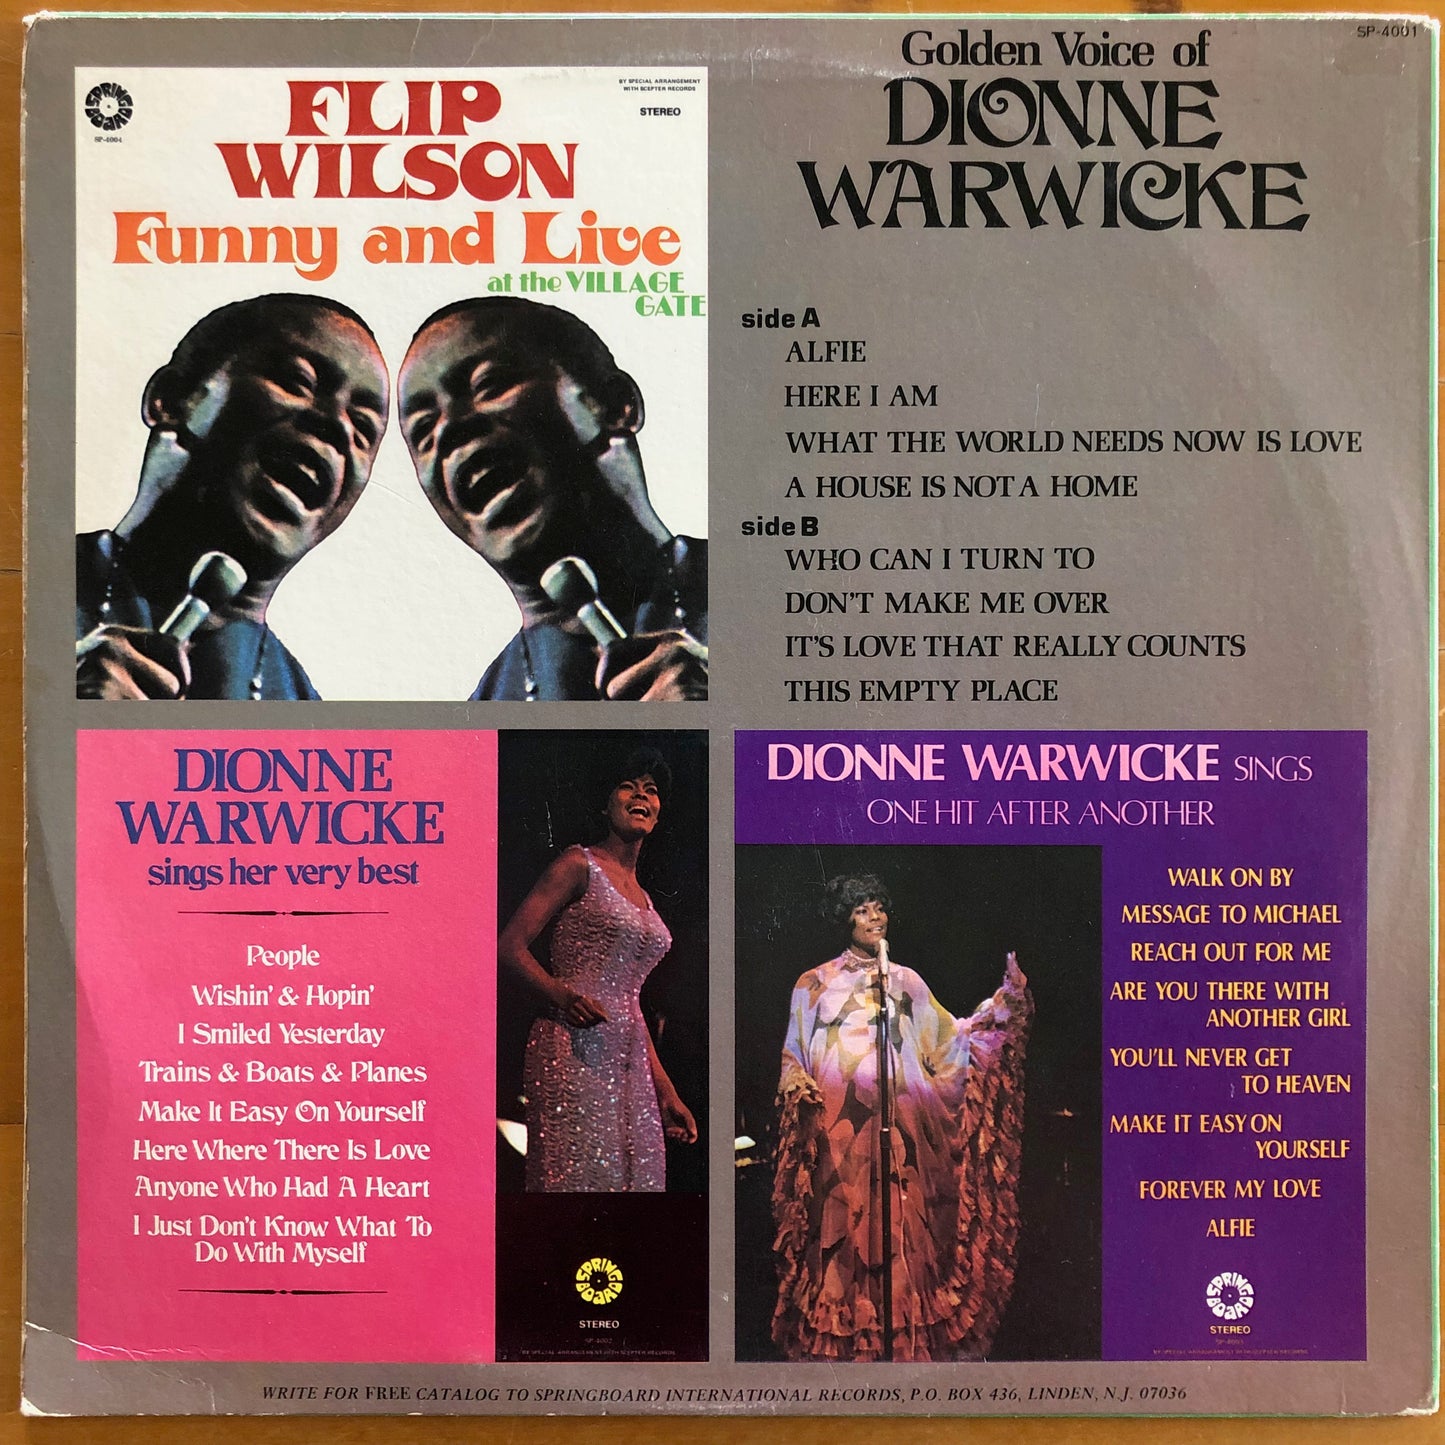 Dionne Warwick - The Golden Voice Of Dionne Warwicke